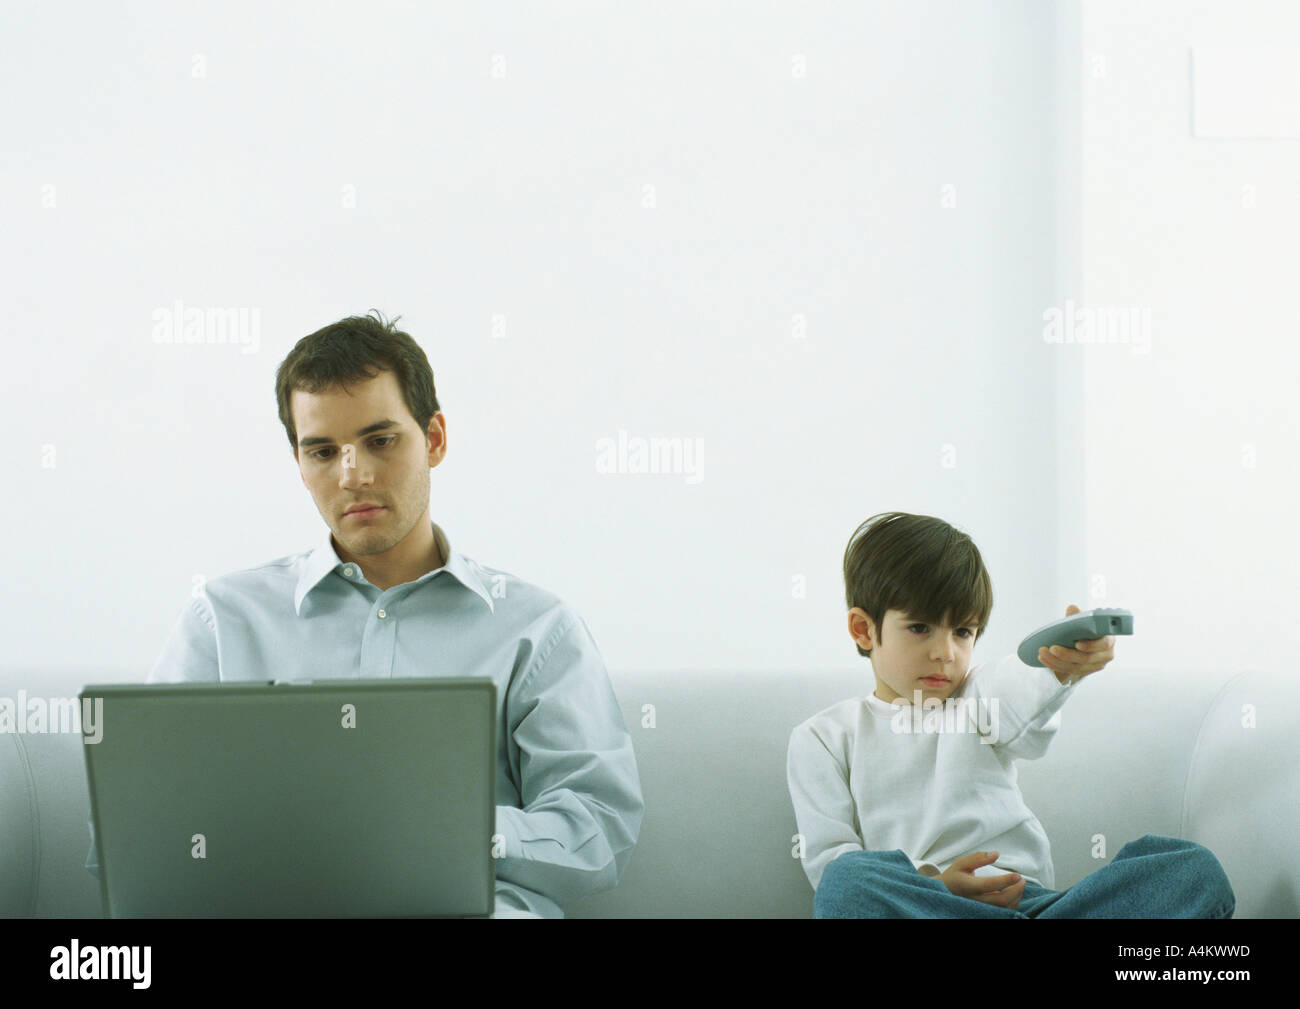 Man sitting on sofa working on laptop, boy sitting next to him pointing remote control Stock Photo